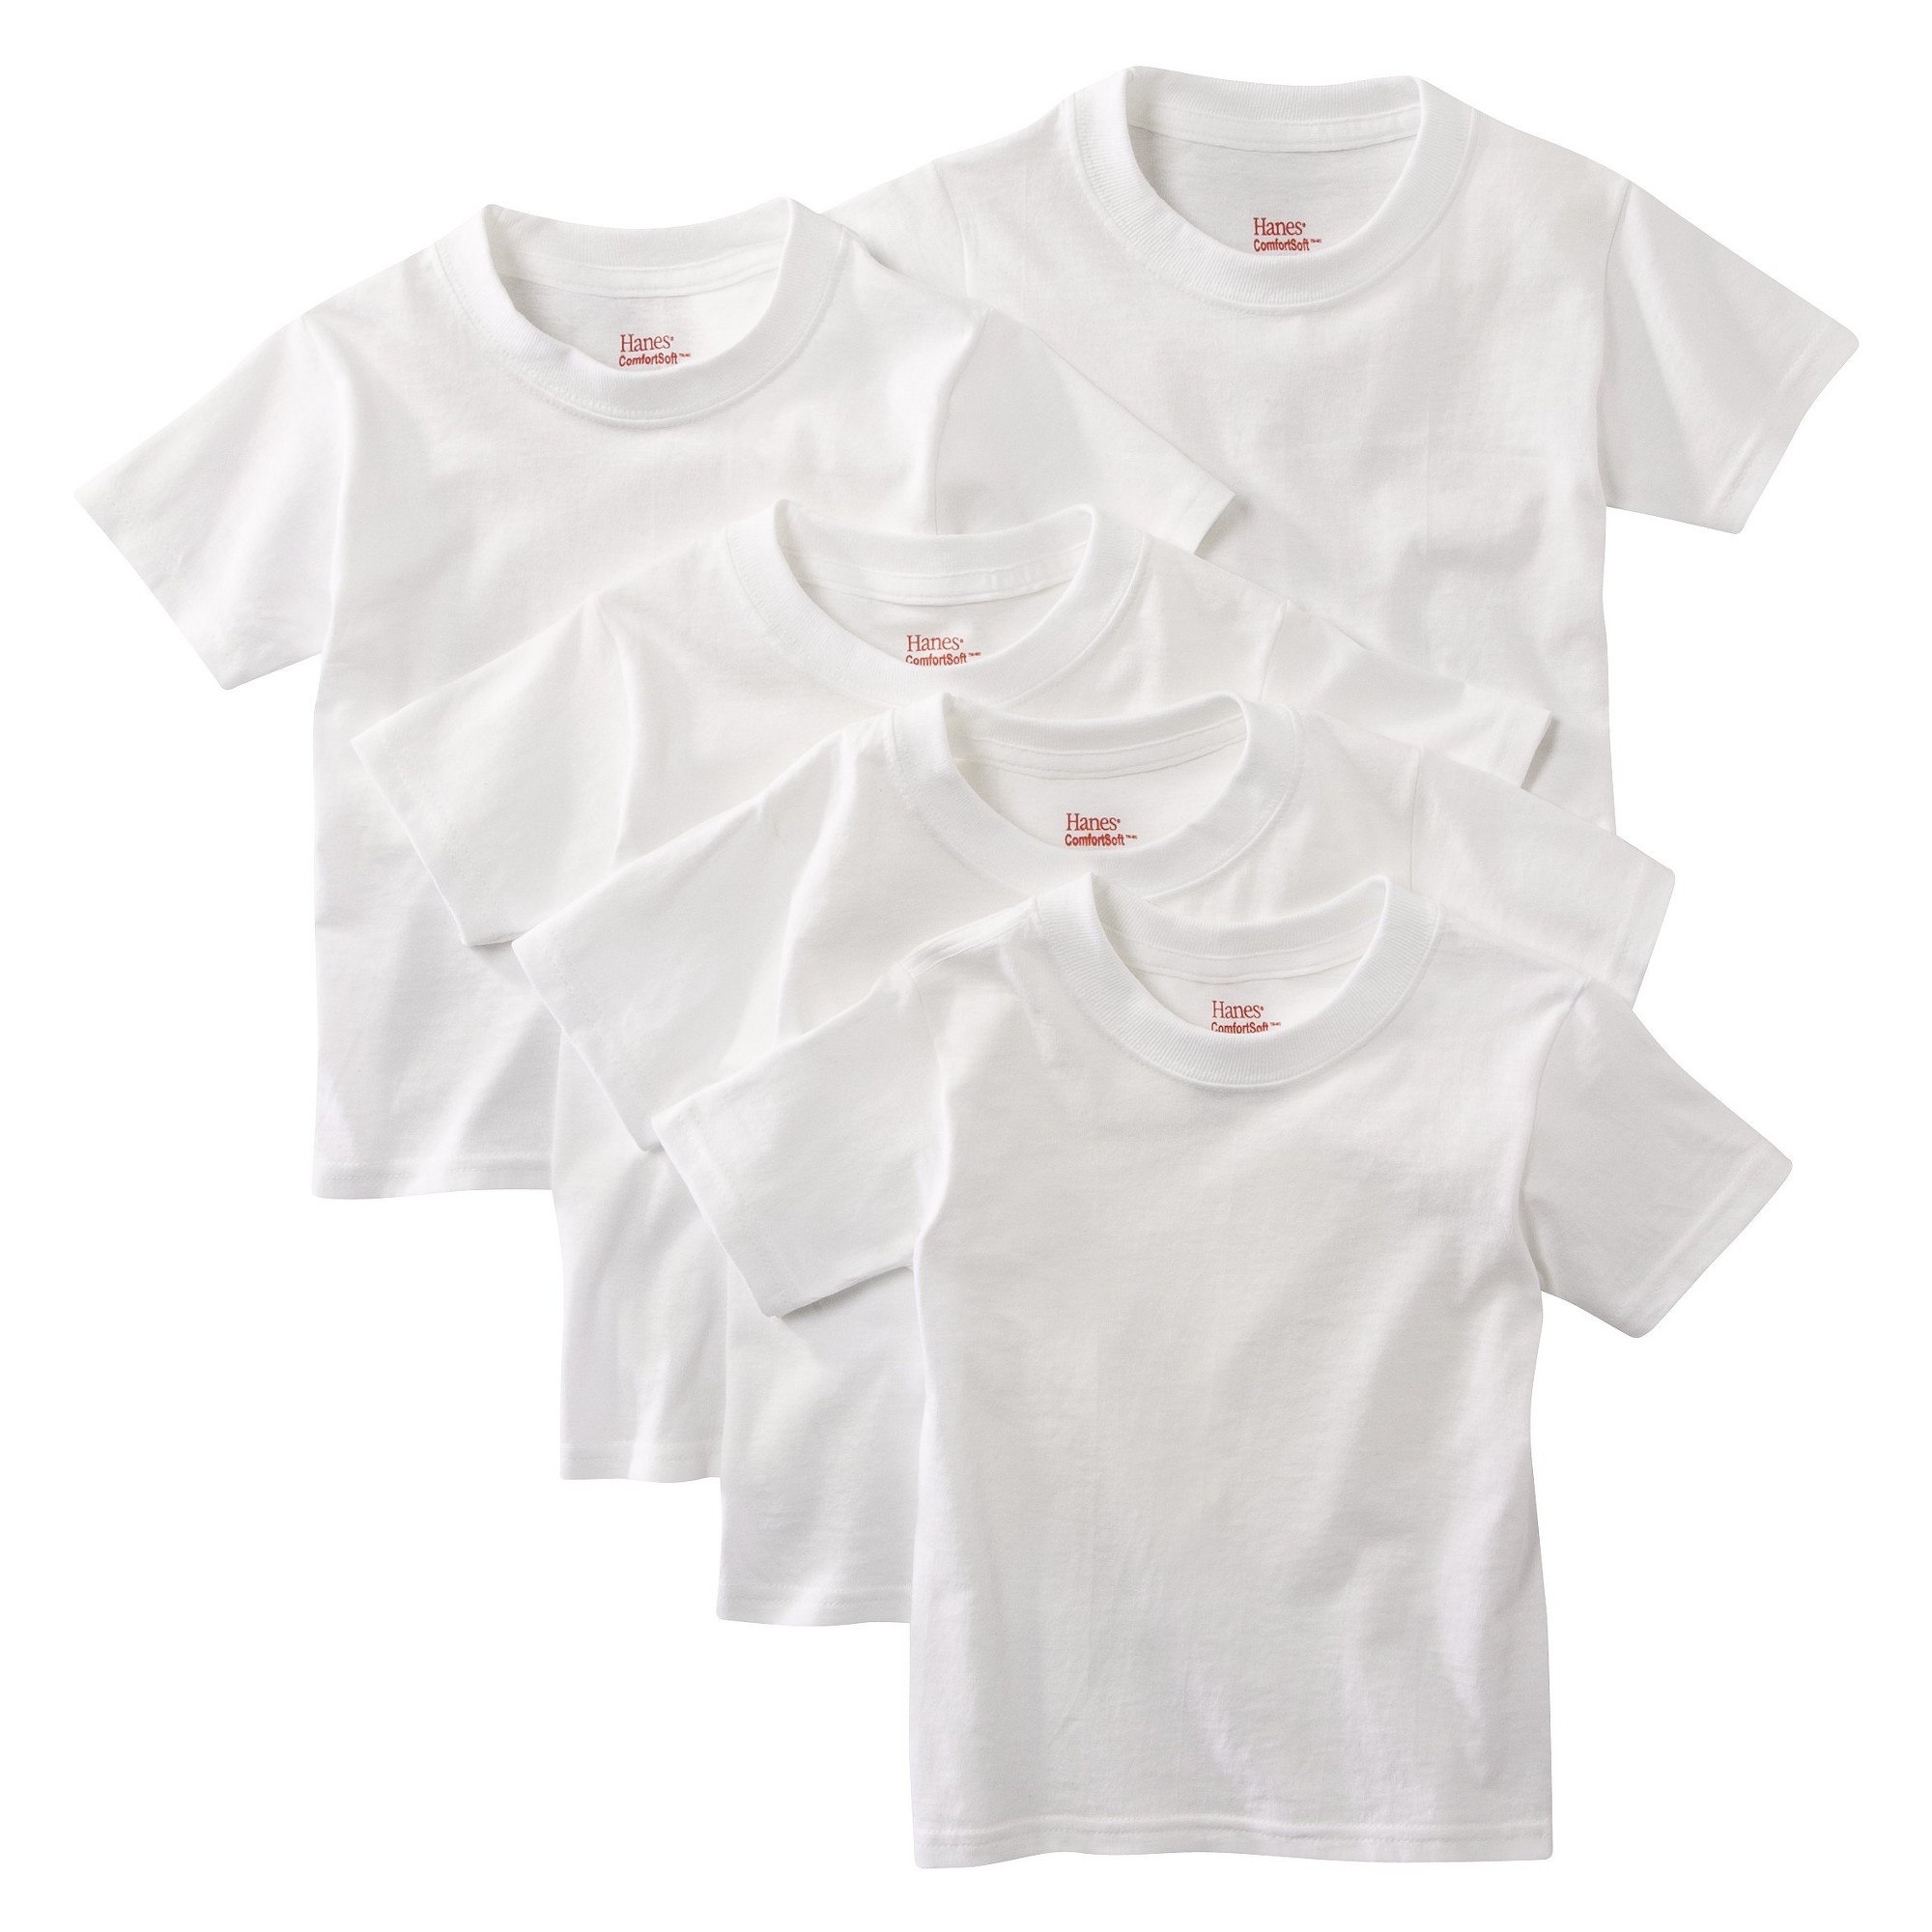 Hanes Toddler Boys' 5 pack Crew T-Shirt - White 4T, Boy's